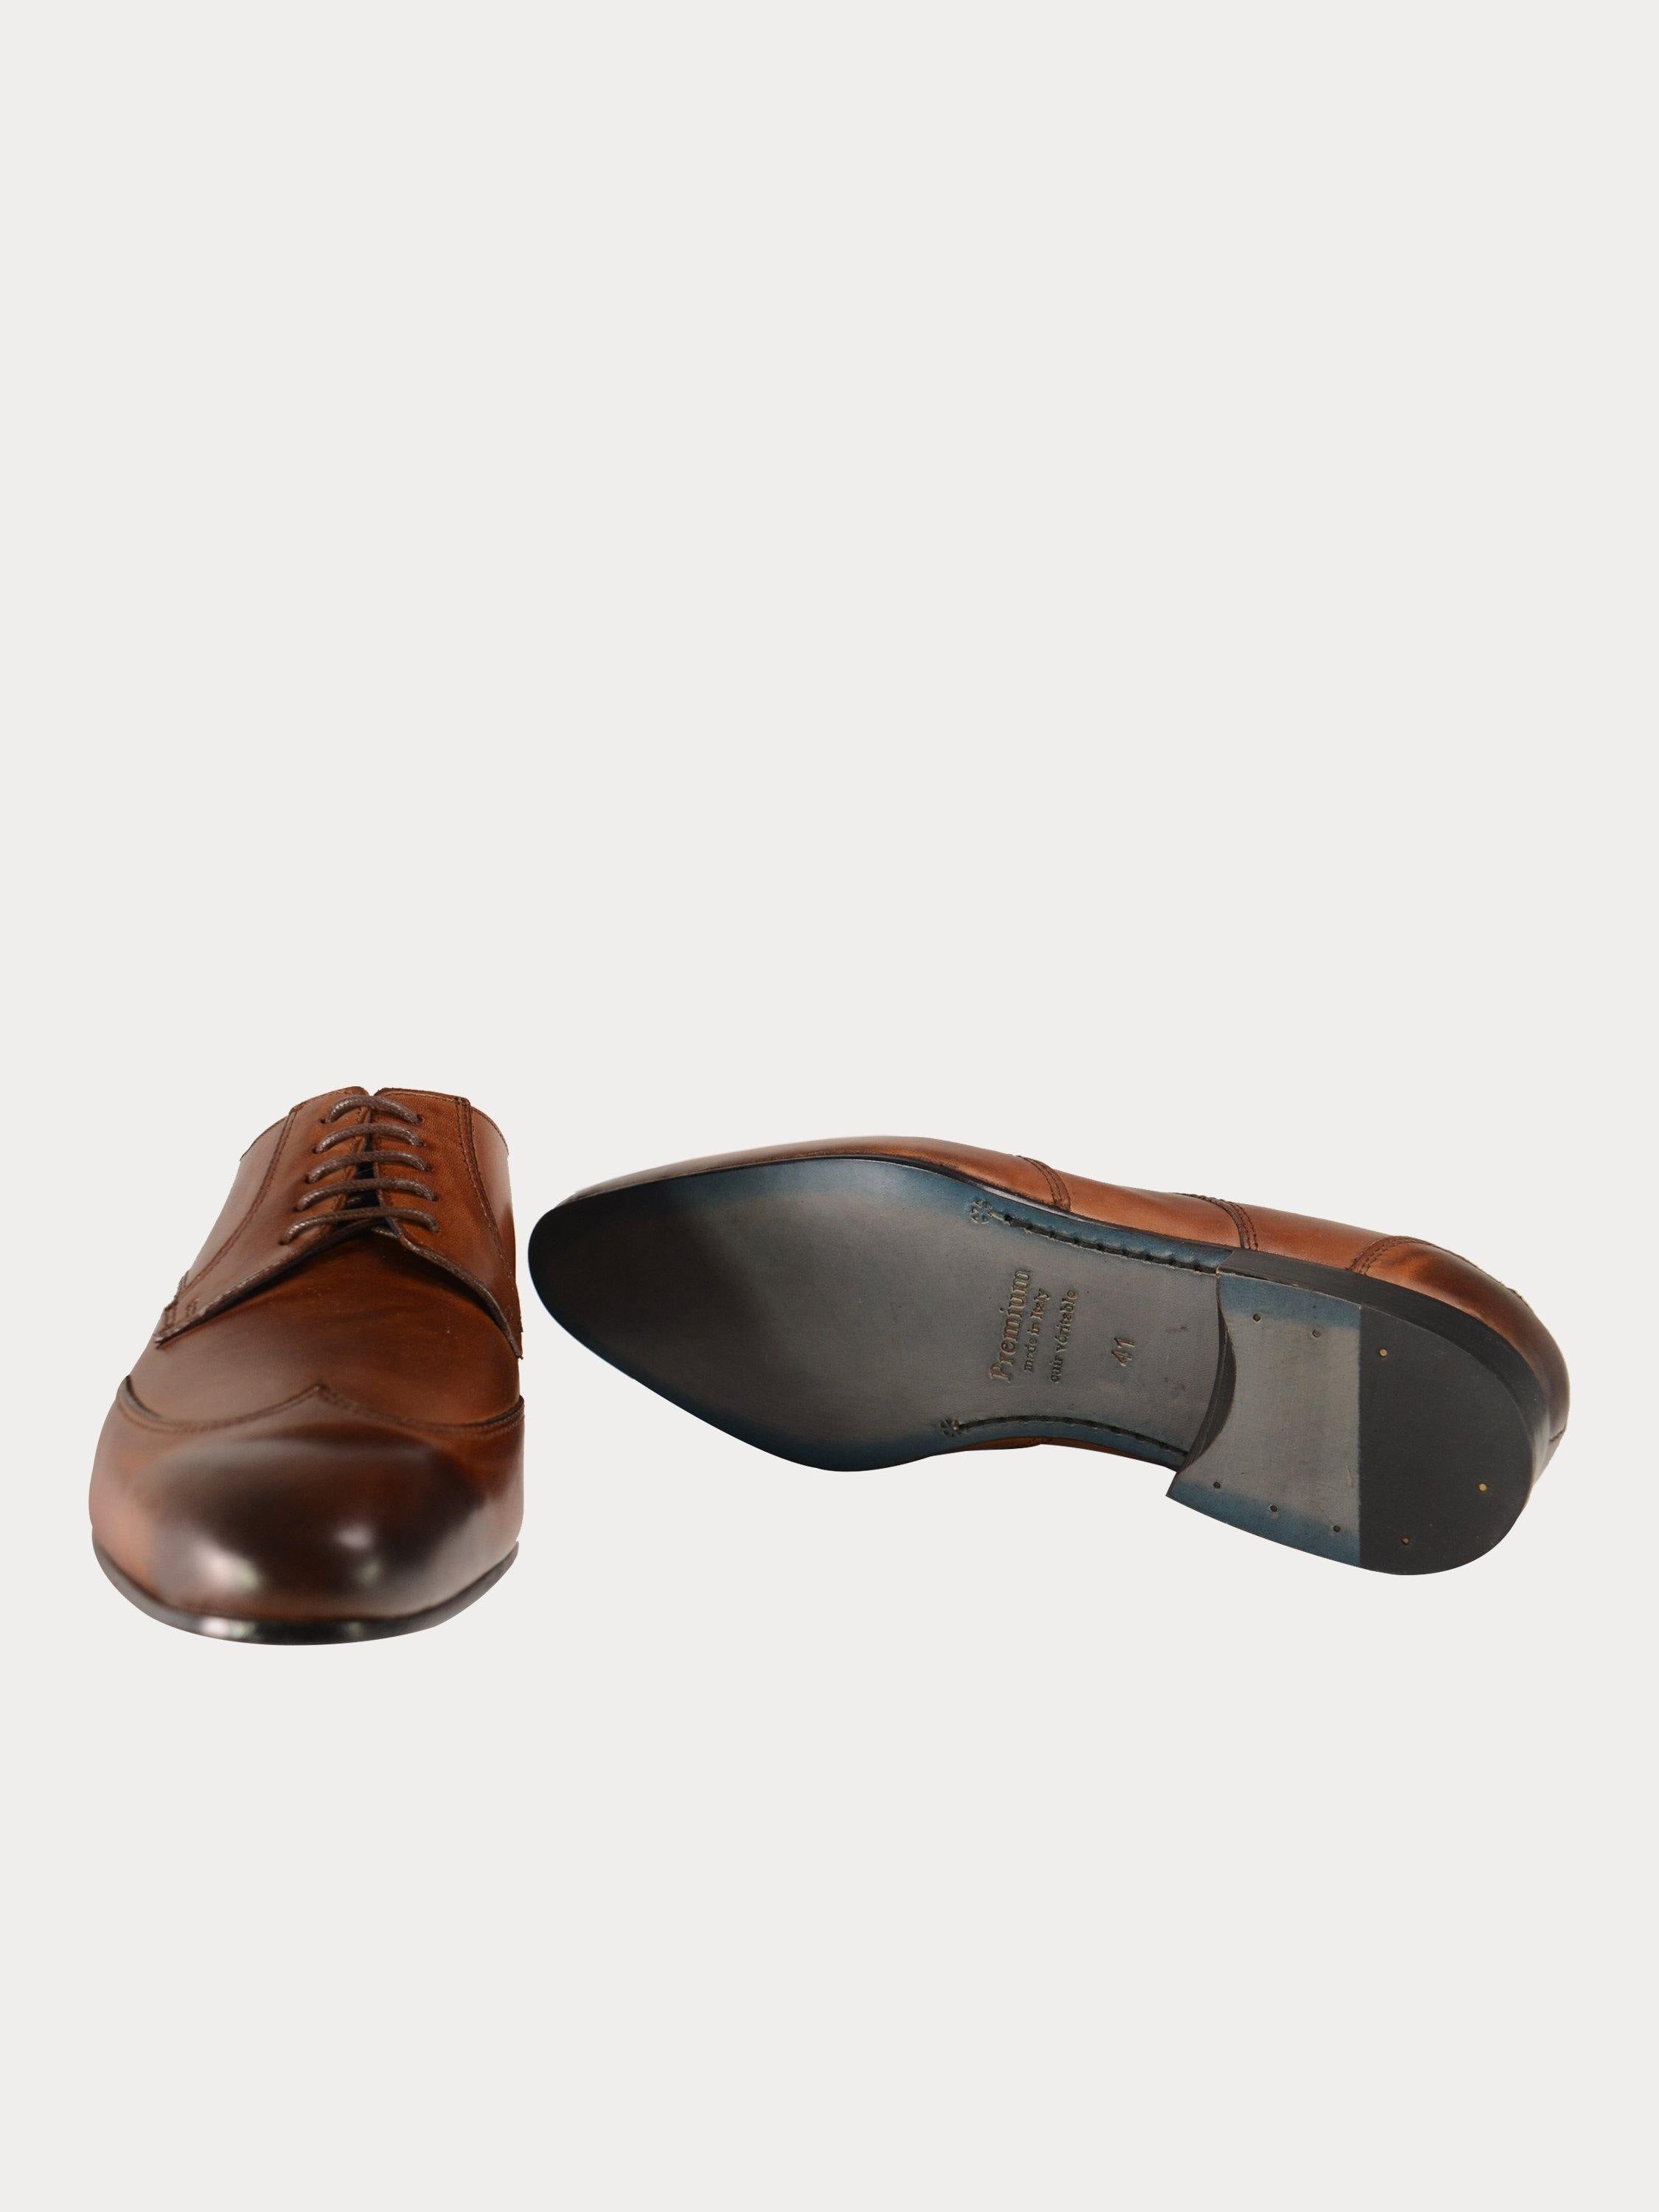 Franzini Men's Lace Up Formal Leather Shoes #color_Brown